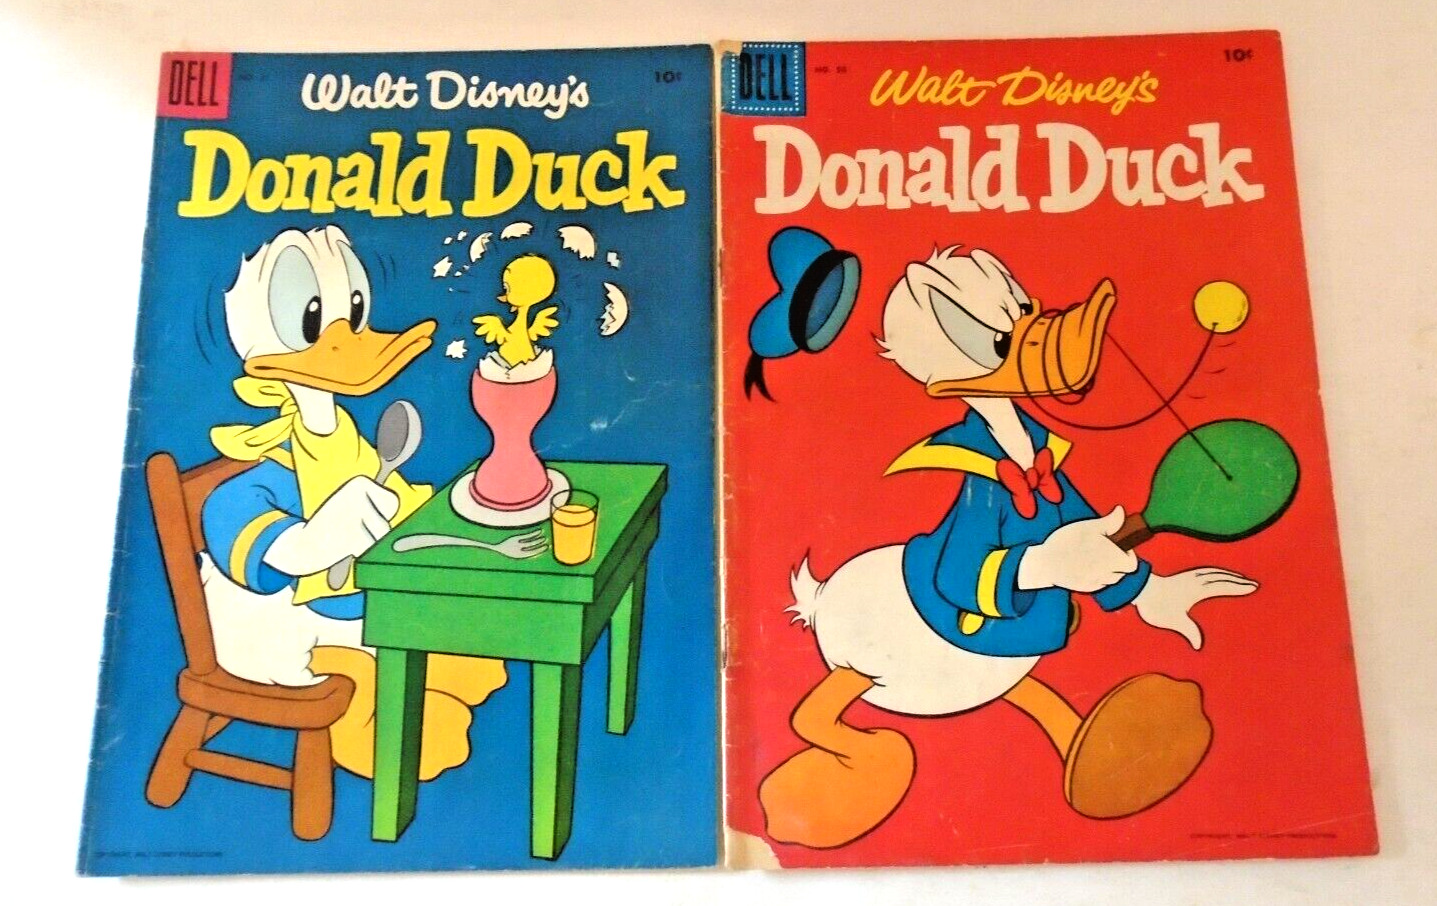 *Donald Duck (Dell) #41-50 Overstreet Guide $206.50 10 Books